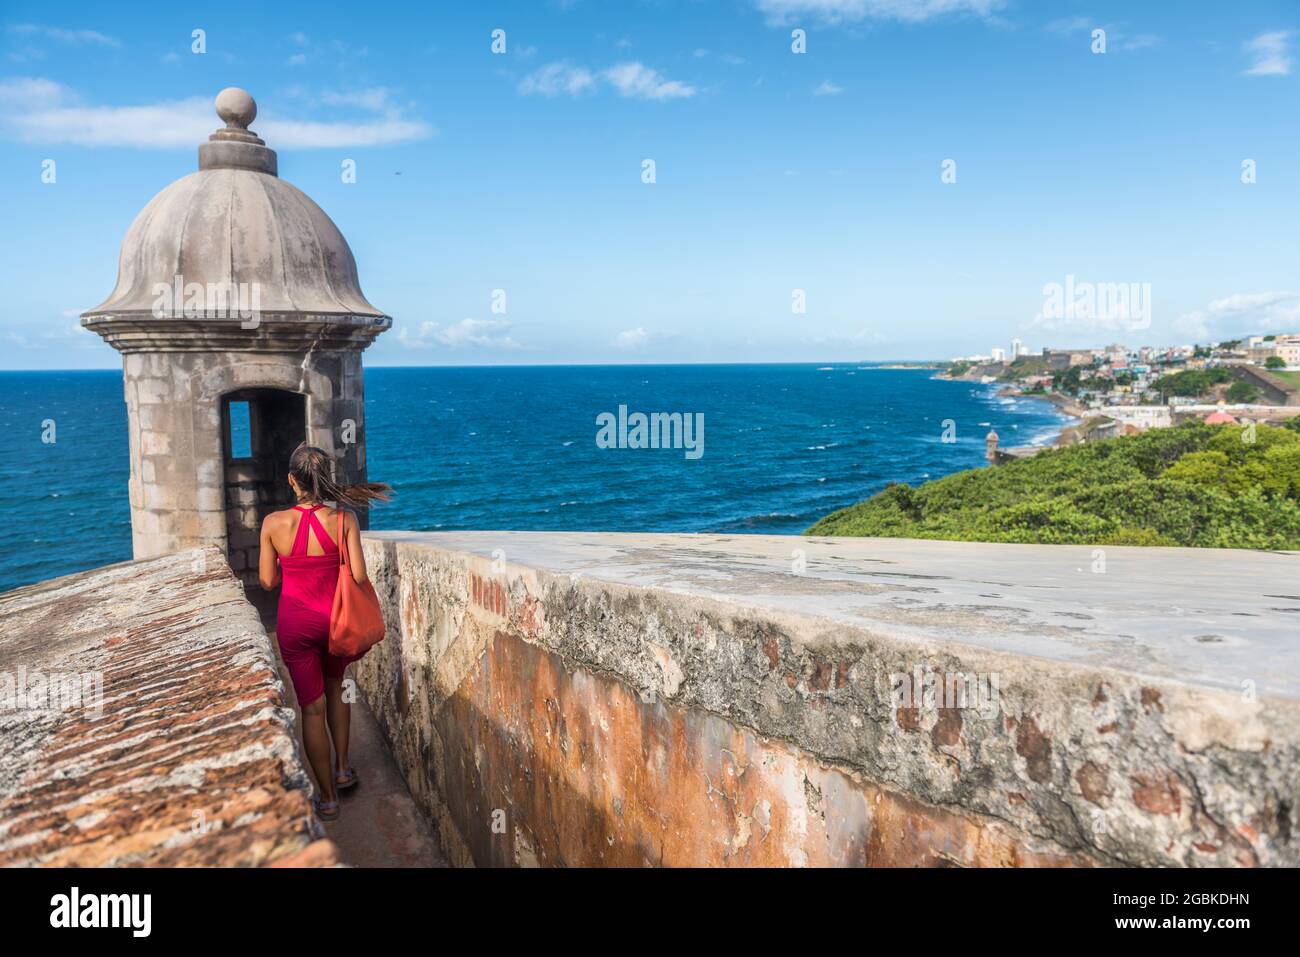 Puerto Rico travel cruise ship destination people walking at Castillo San Felipe del Morro in Old San Juan city summer vacation Stock Photo